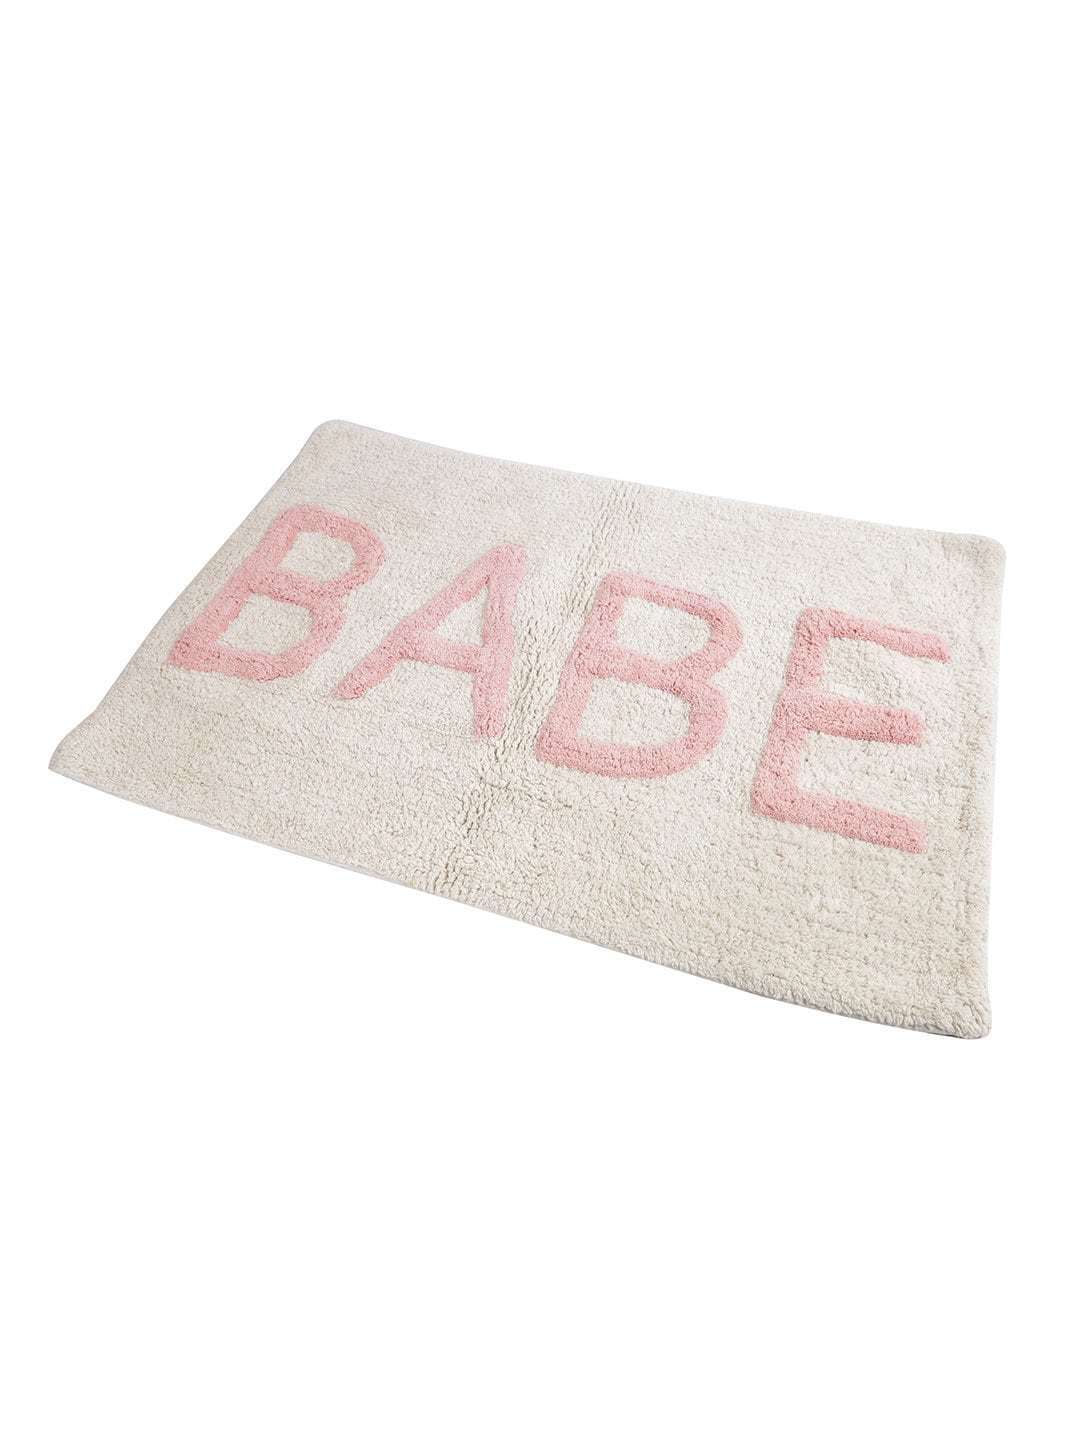 BABE Bath Mat for new year gift Hand Tufted Cotton Bath Rug